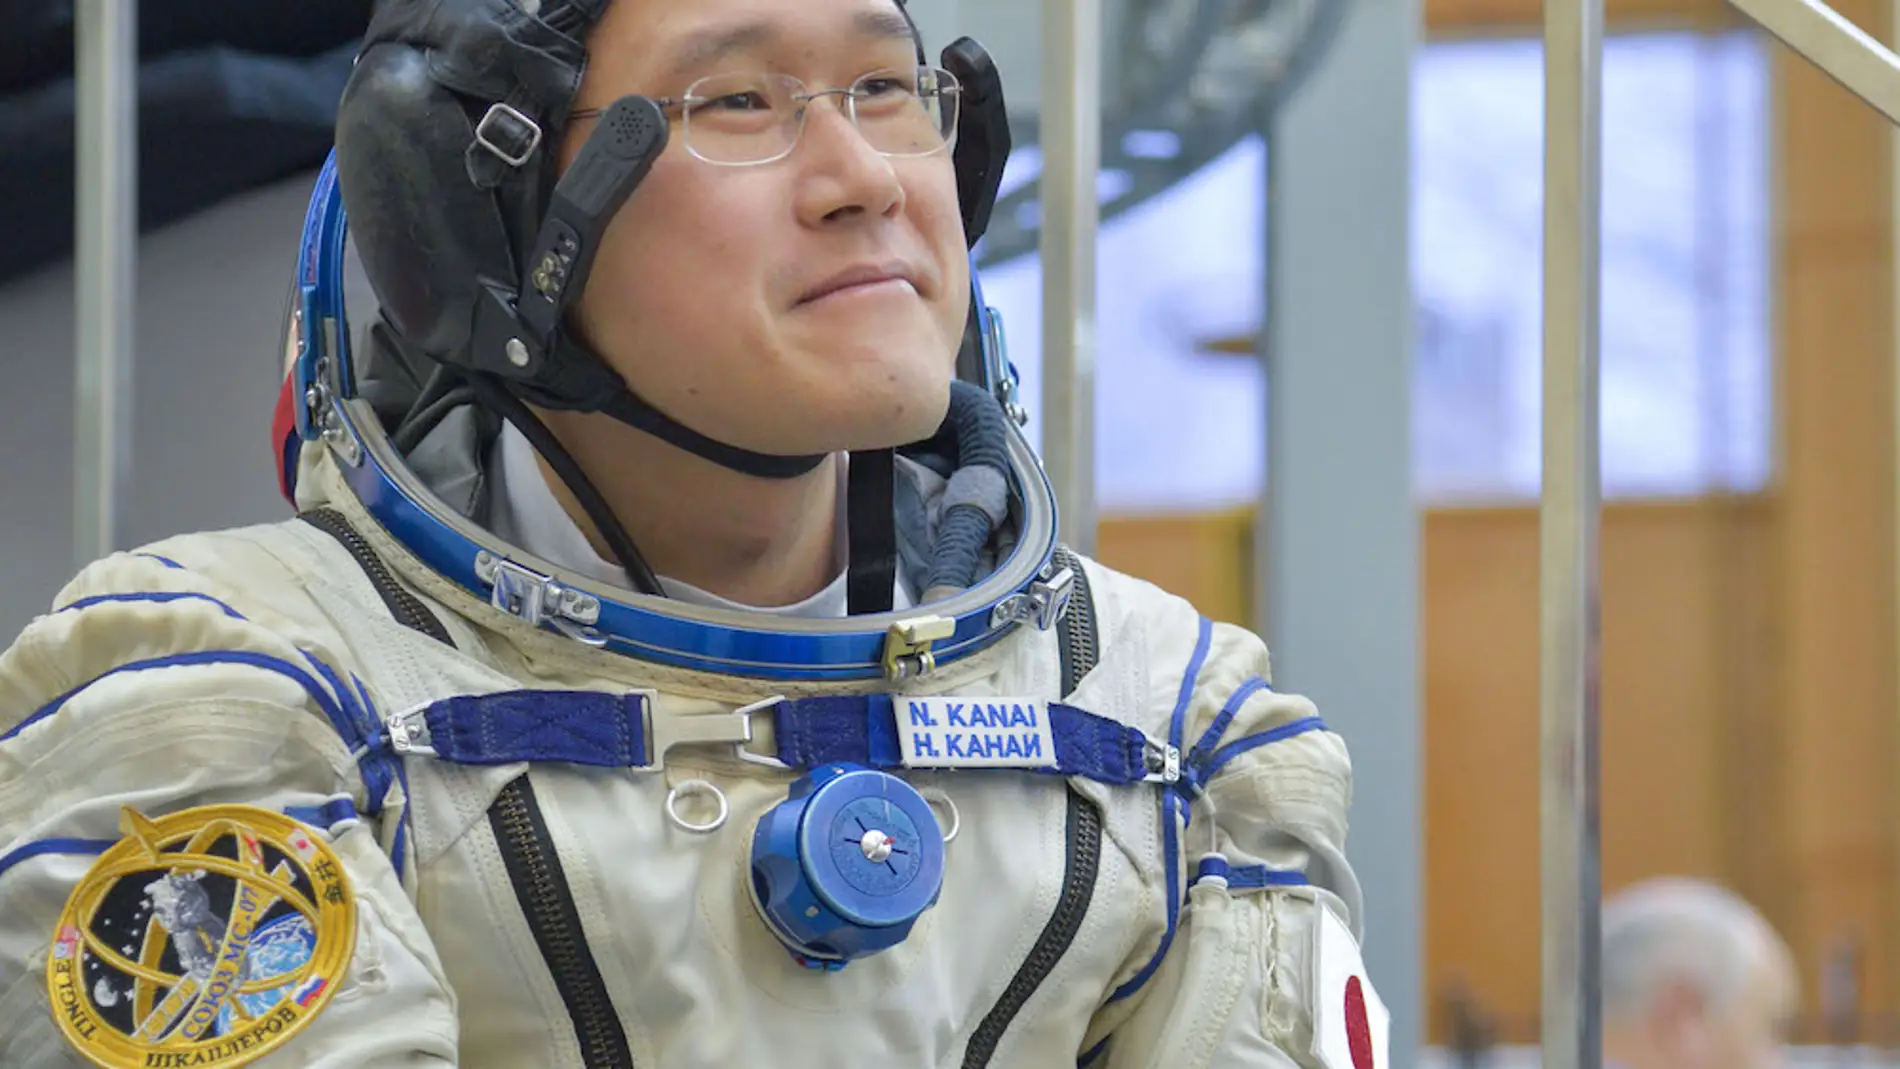 El astronauta japonés Norishige Kanai permanecerá seis meses en la EEI 